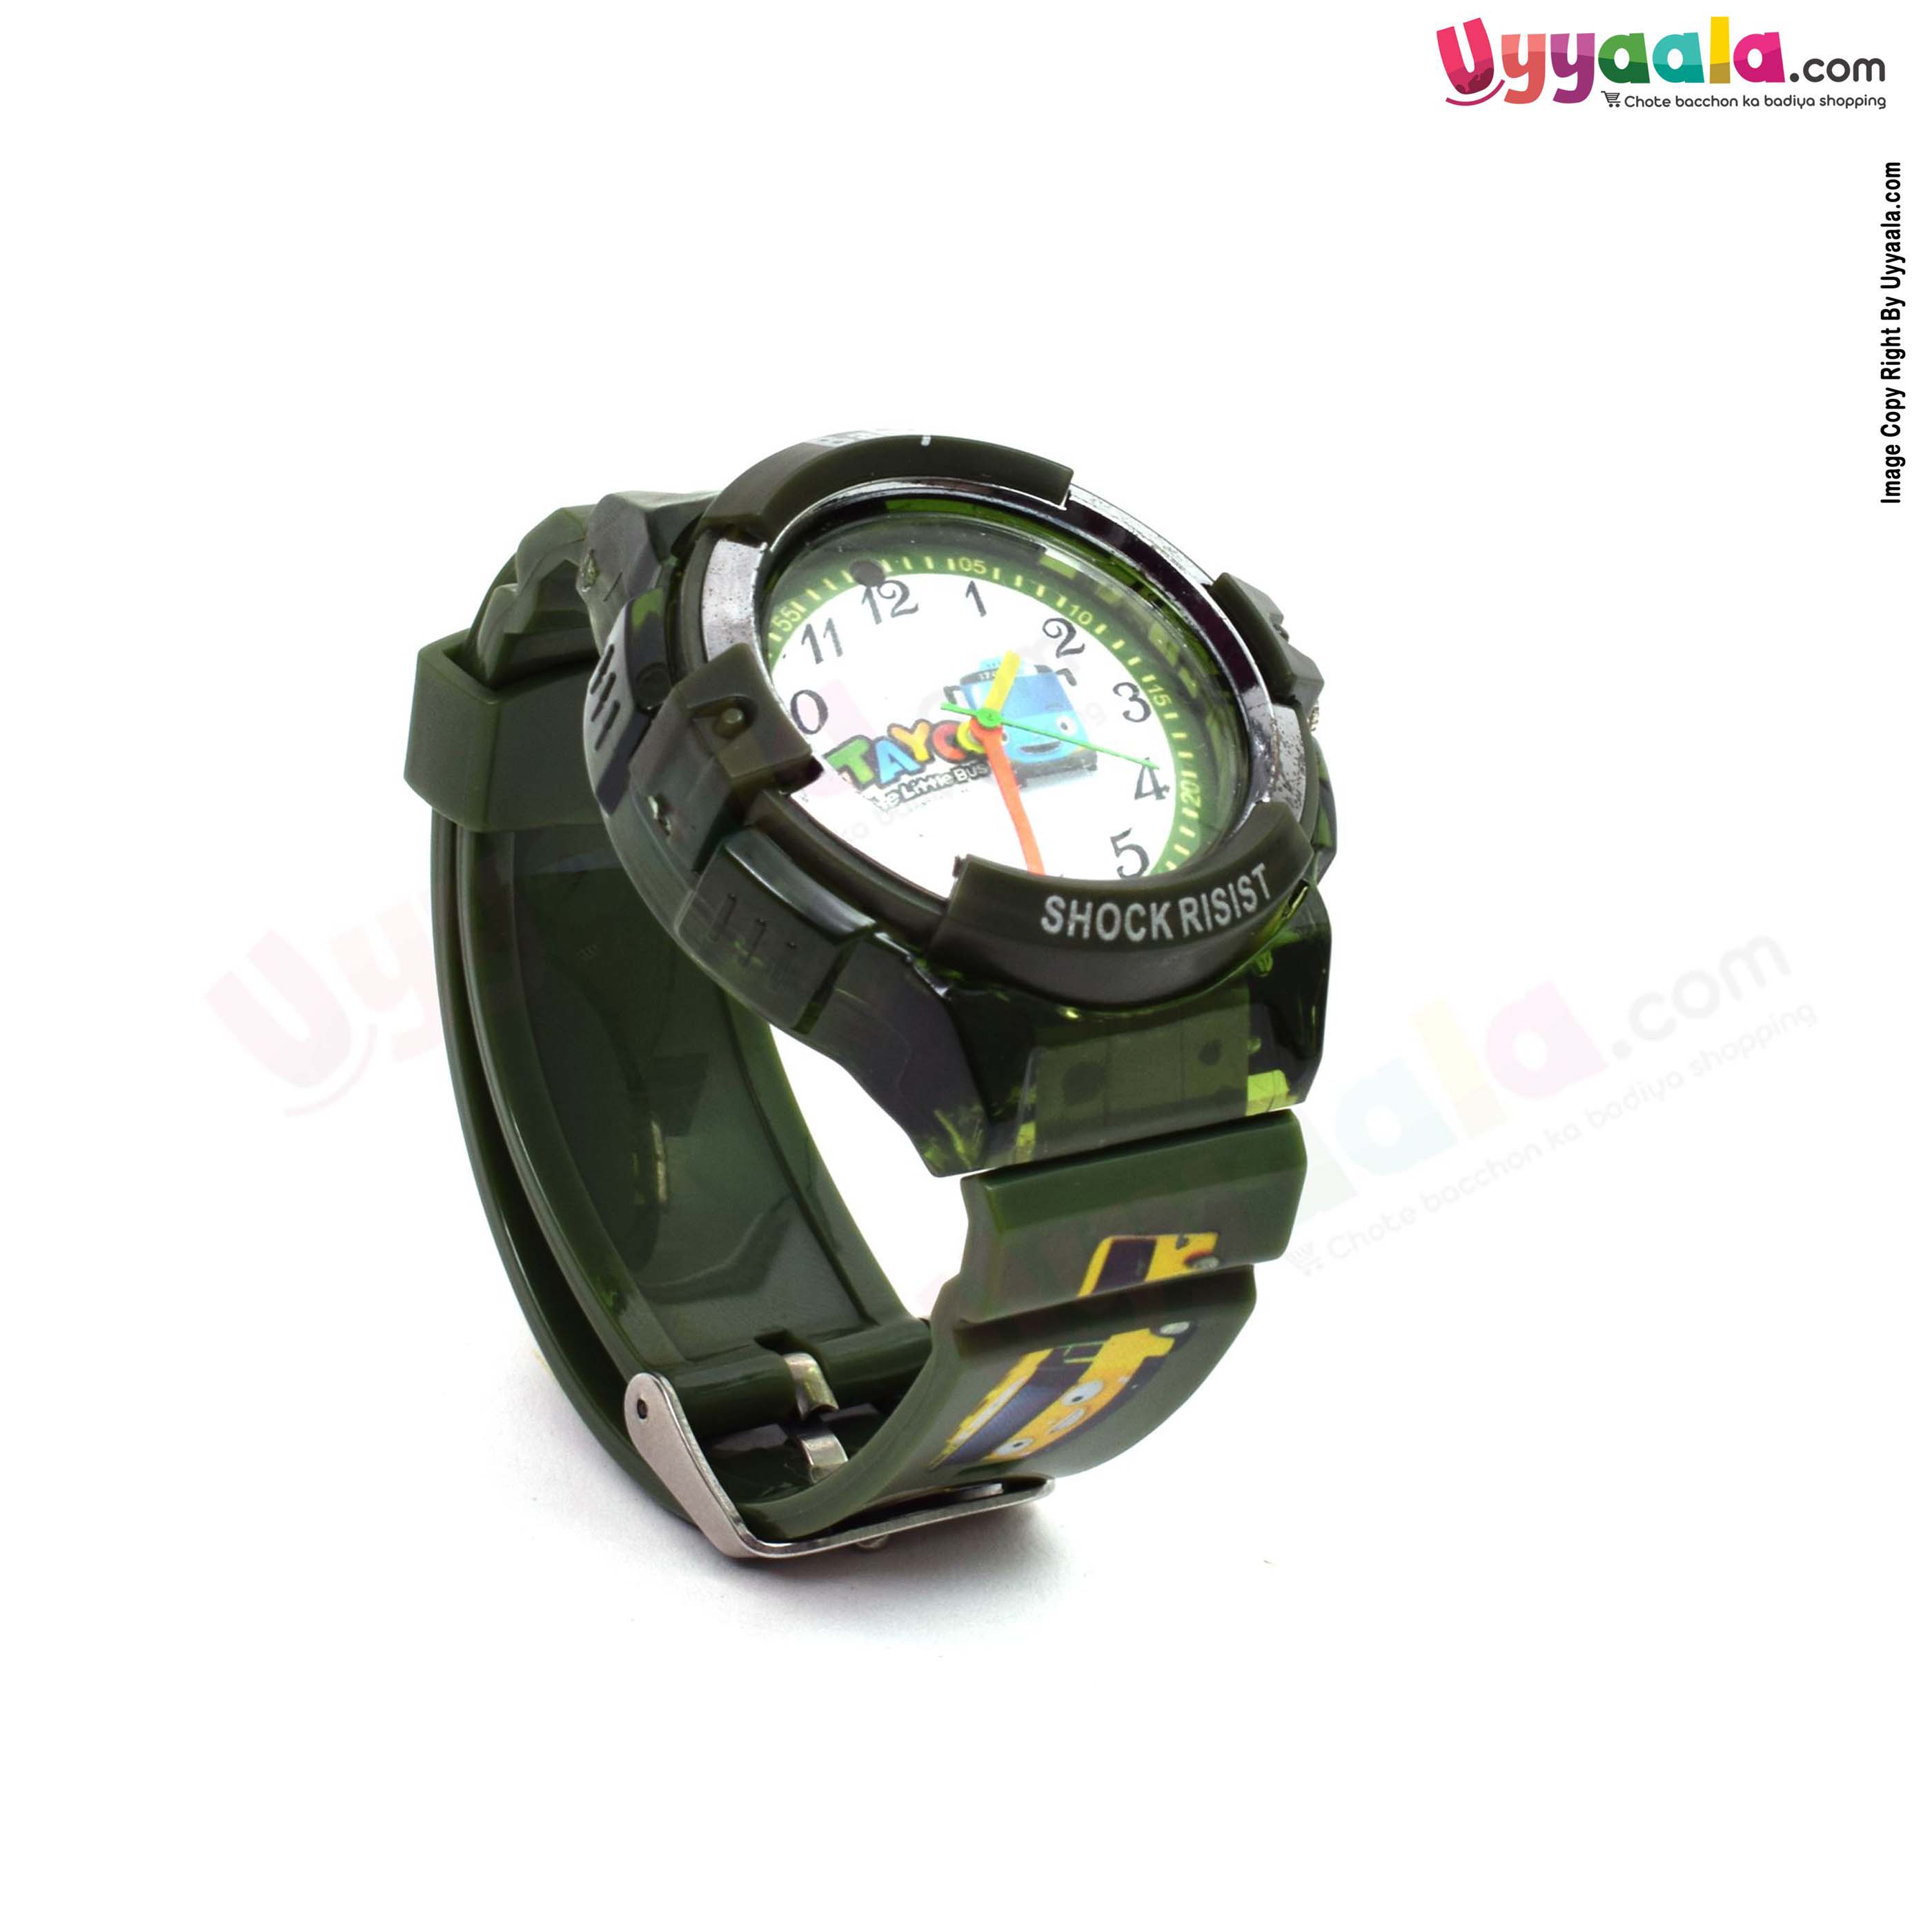 Cartoon analog watch for kids - green strap with cartoon print